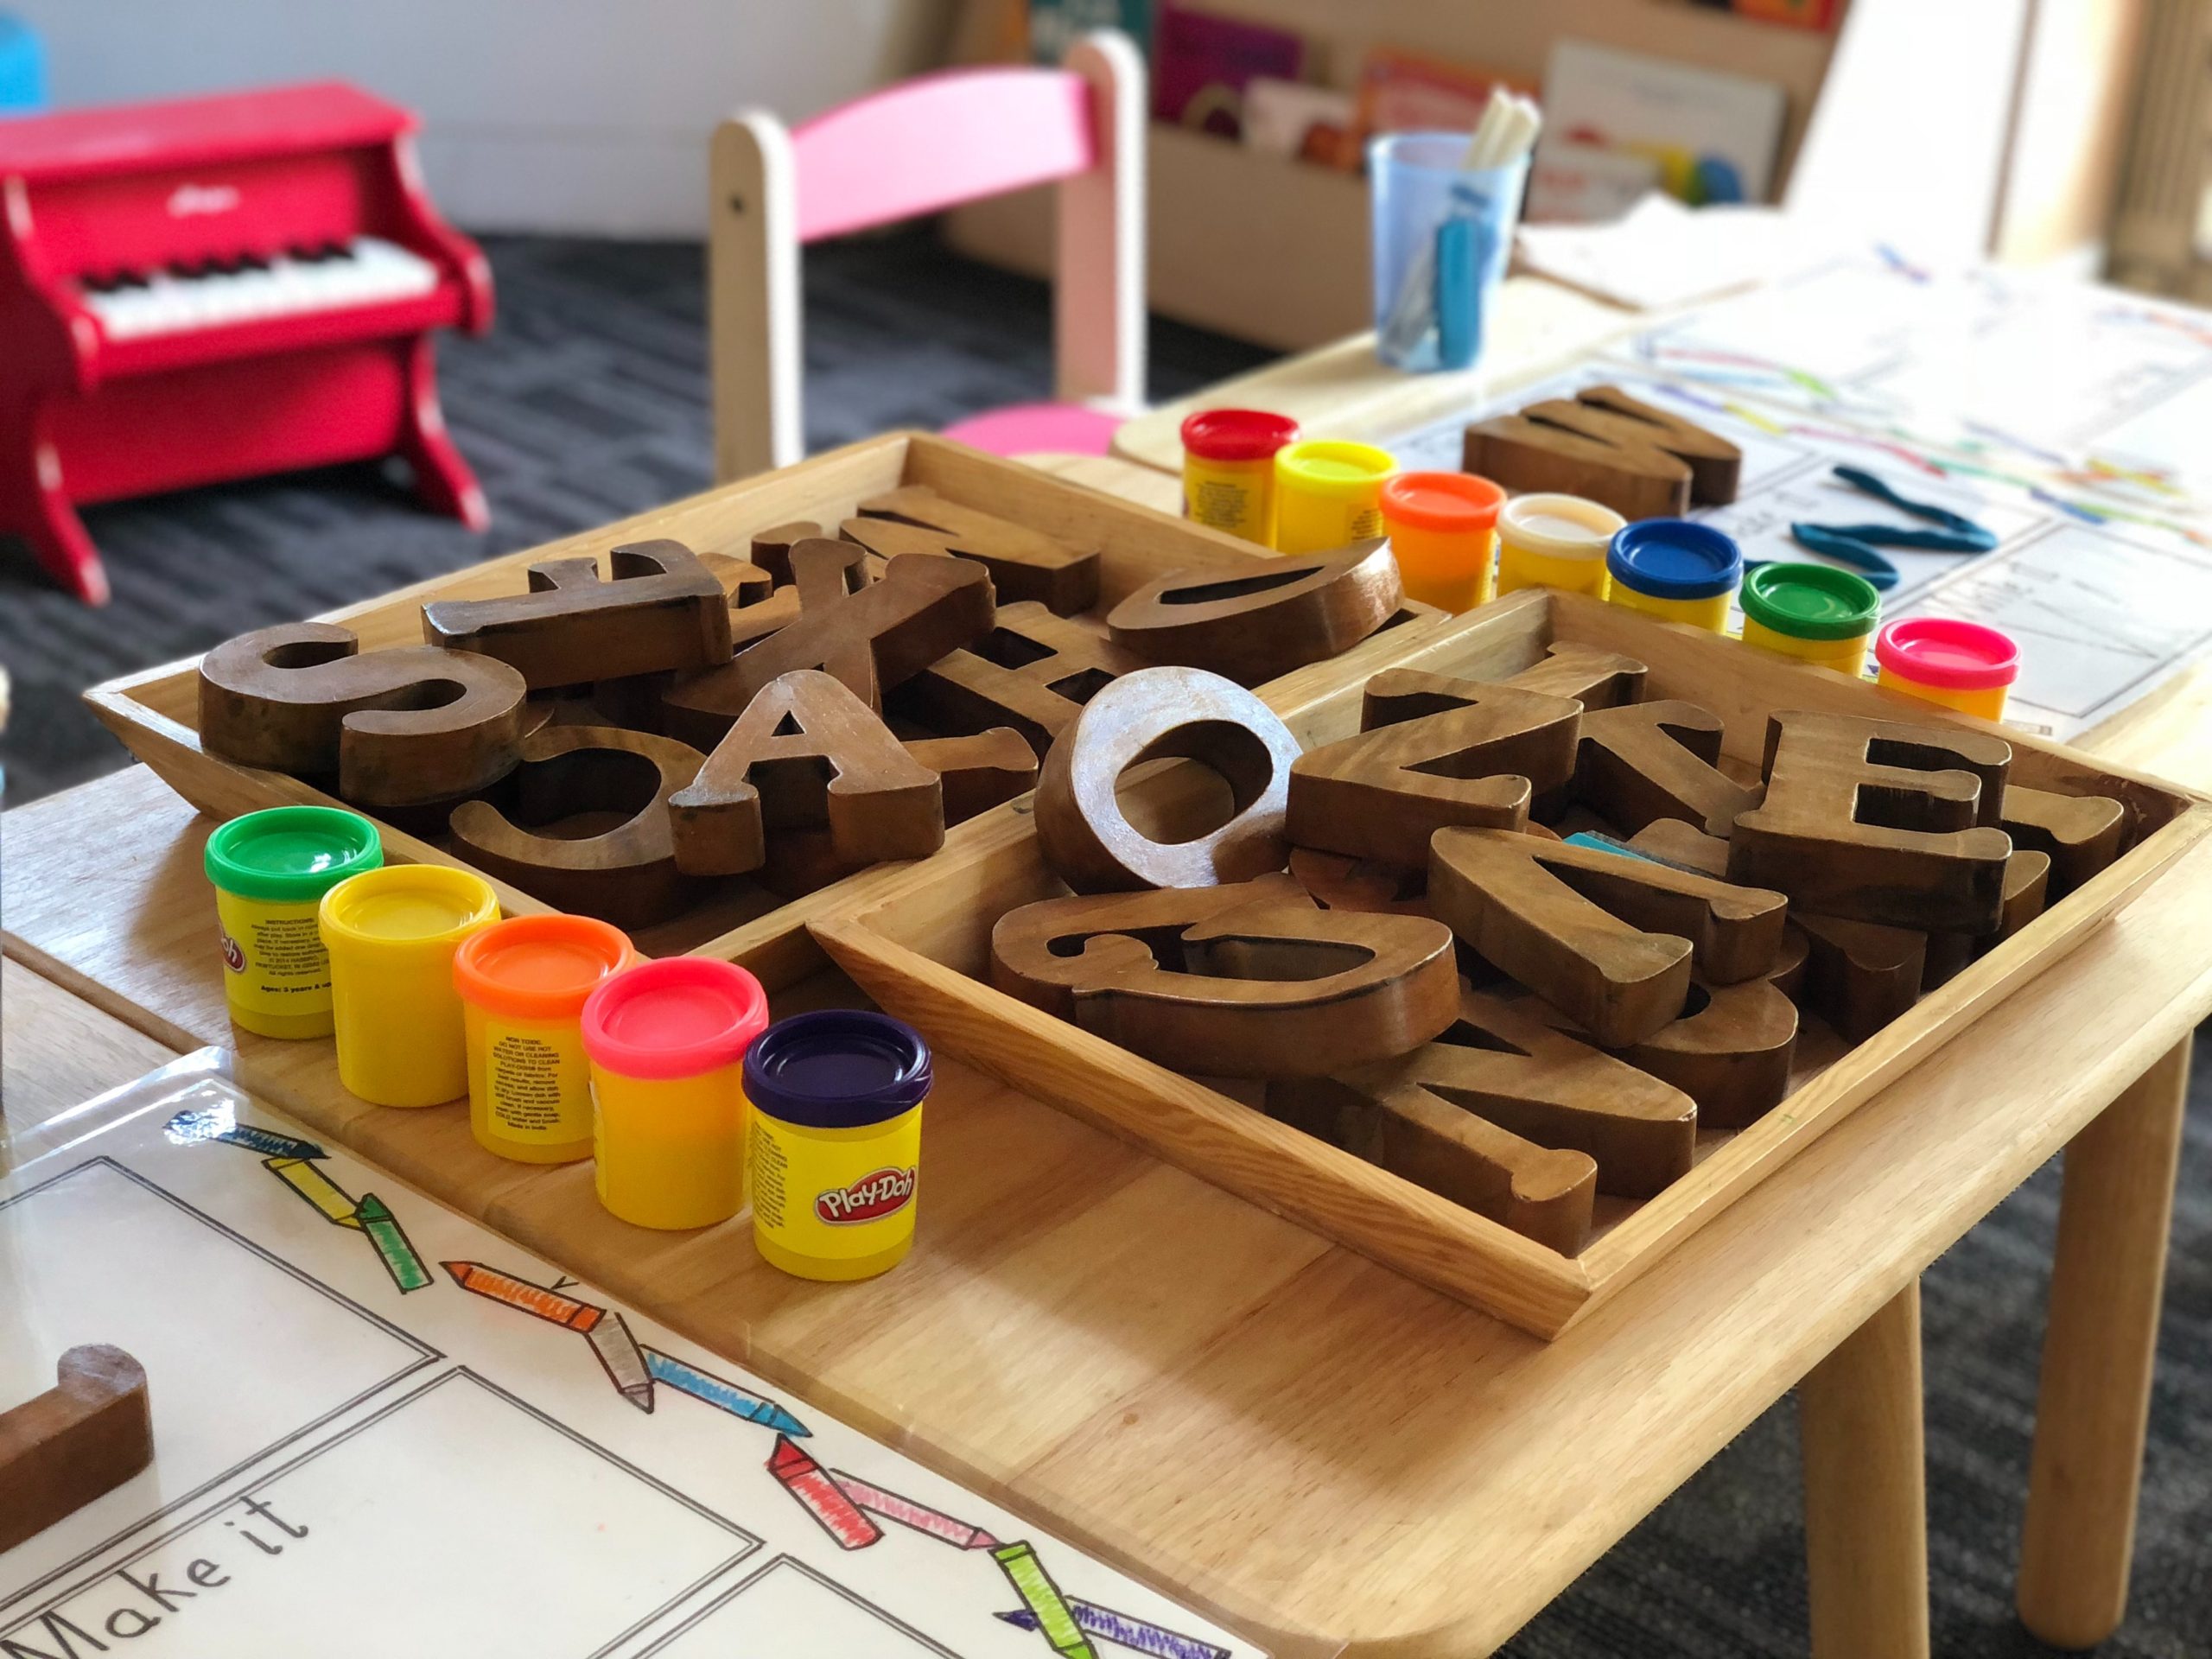 Blocks on a table in a kindergarten classroom.